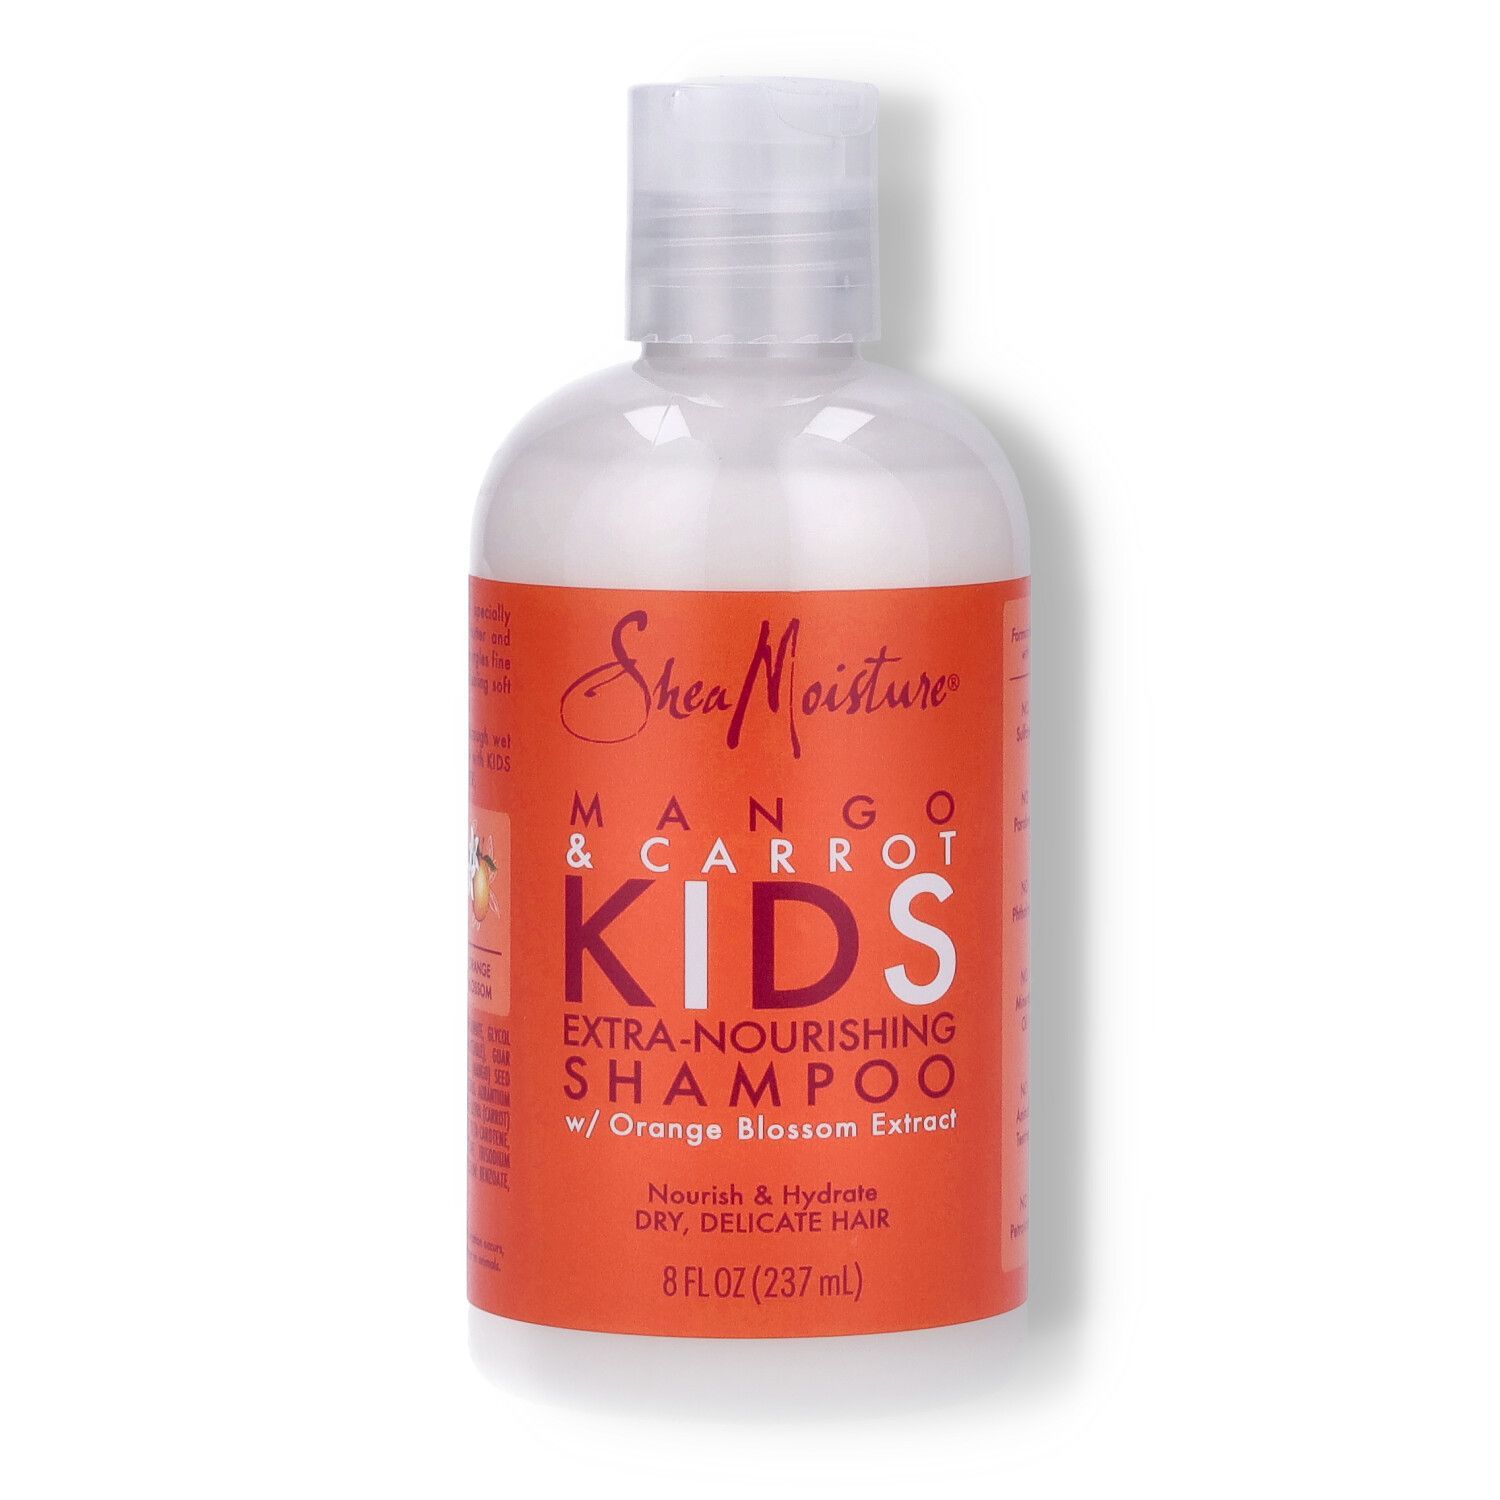 Shea Moisture Mango & Carrot Kids Extra-Nourishing Shampoo - 8oz